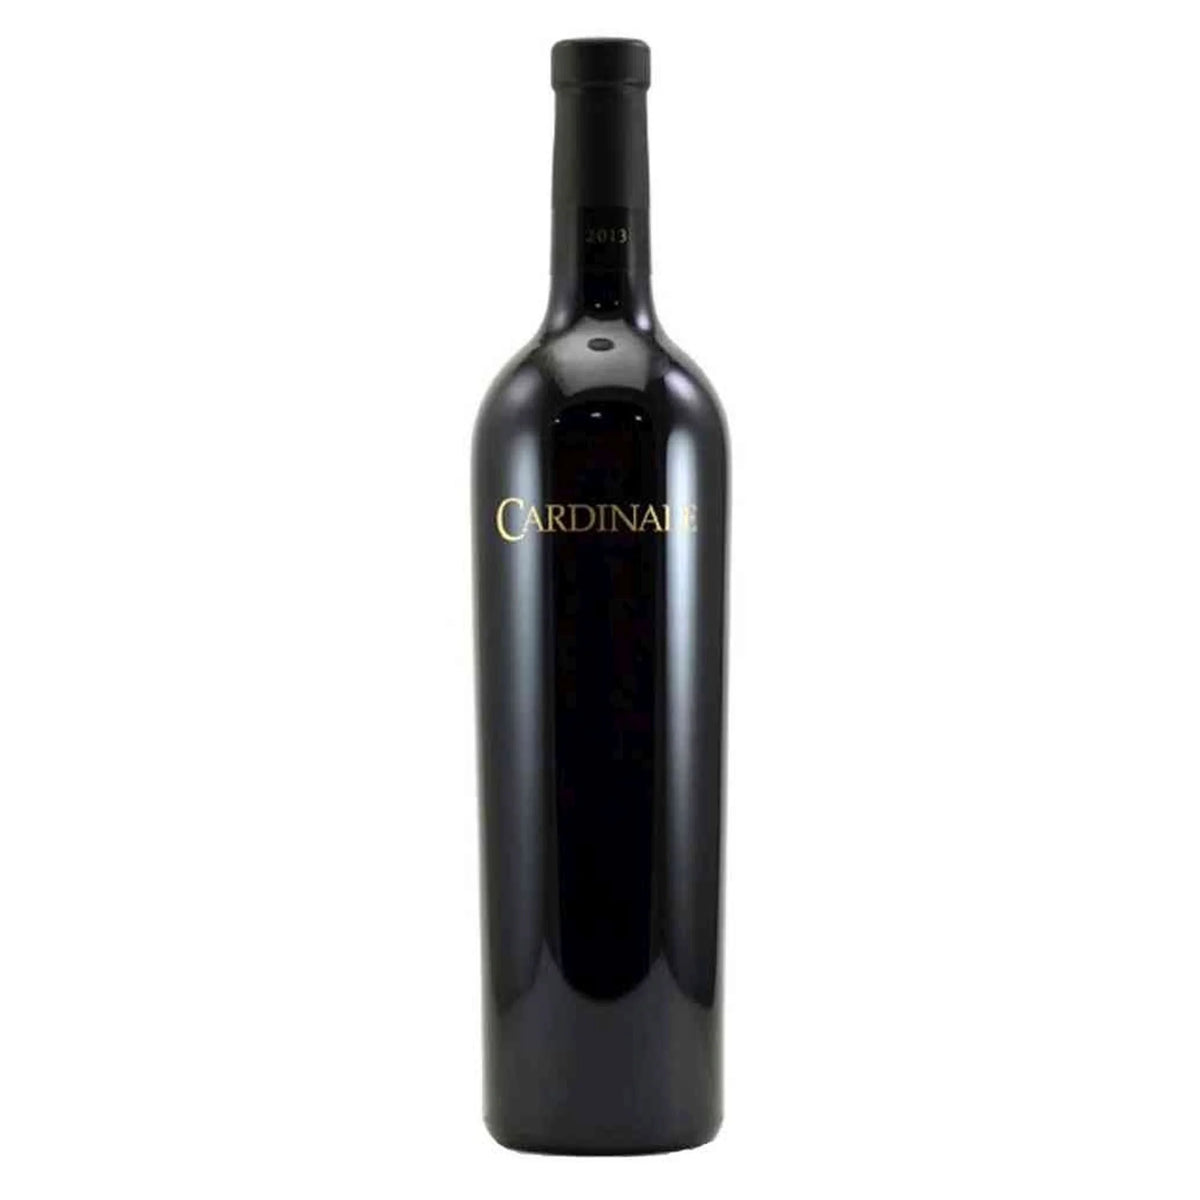 Cardinale-Rotwein-Cabernet Sauvignon-2014 Proprietary Red Wine-WINECOM